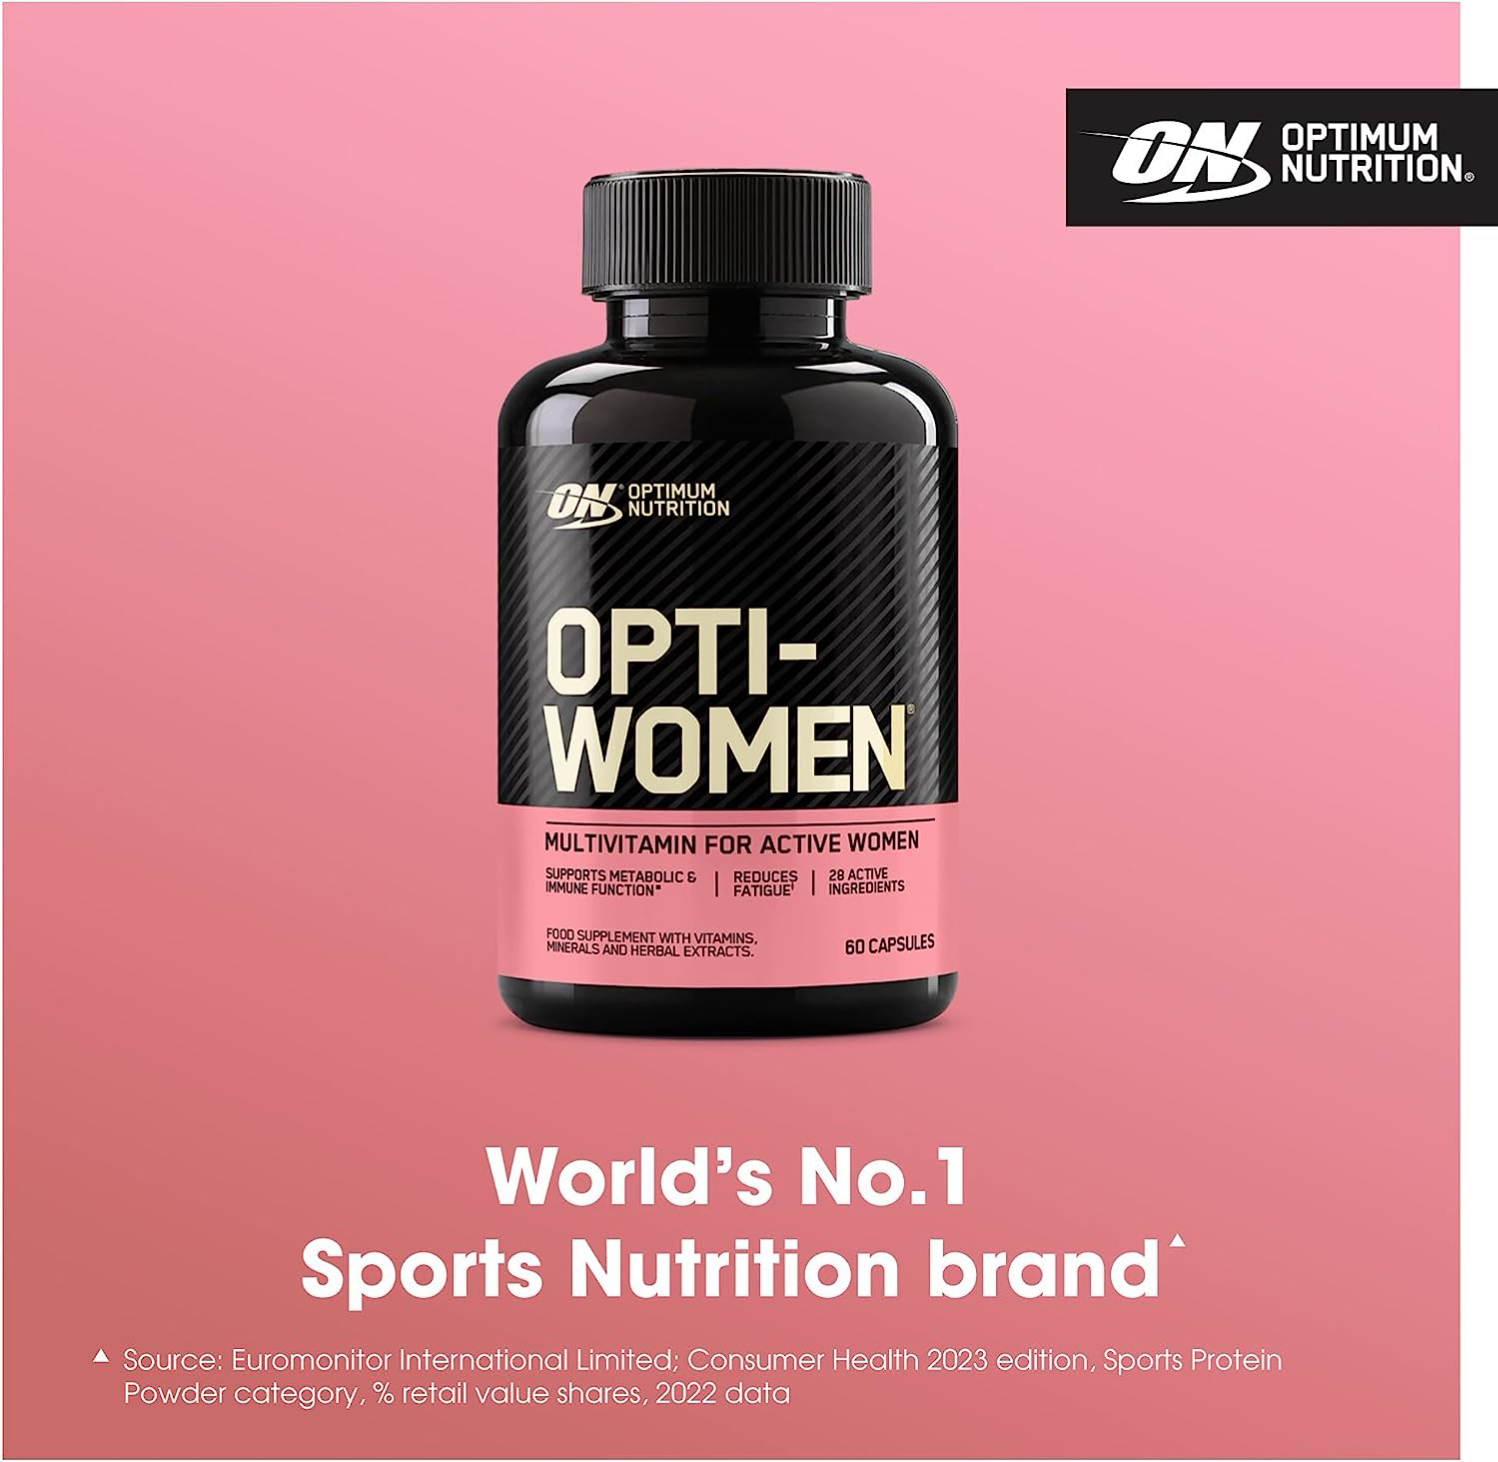 Optimum Nutrition Opti-Women - 60 TABLETS! Birbaşa